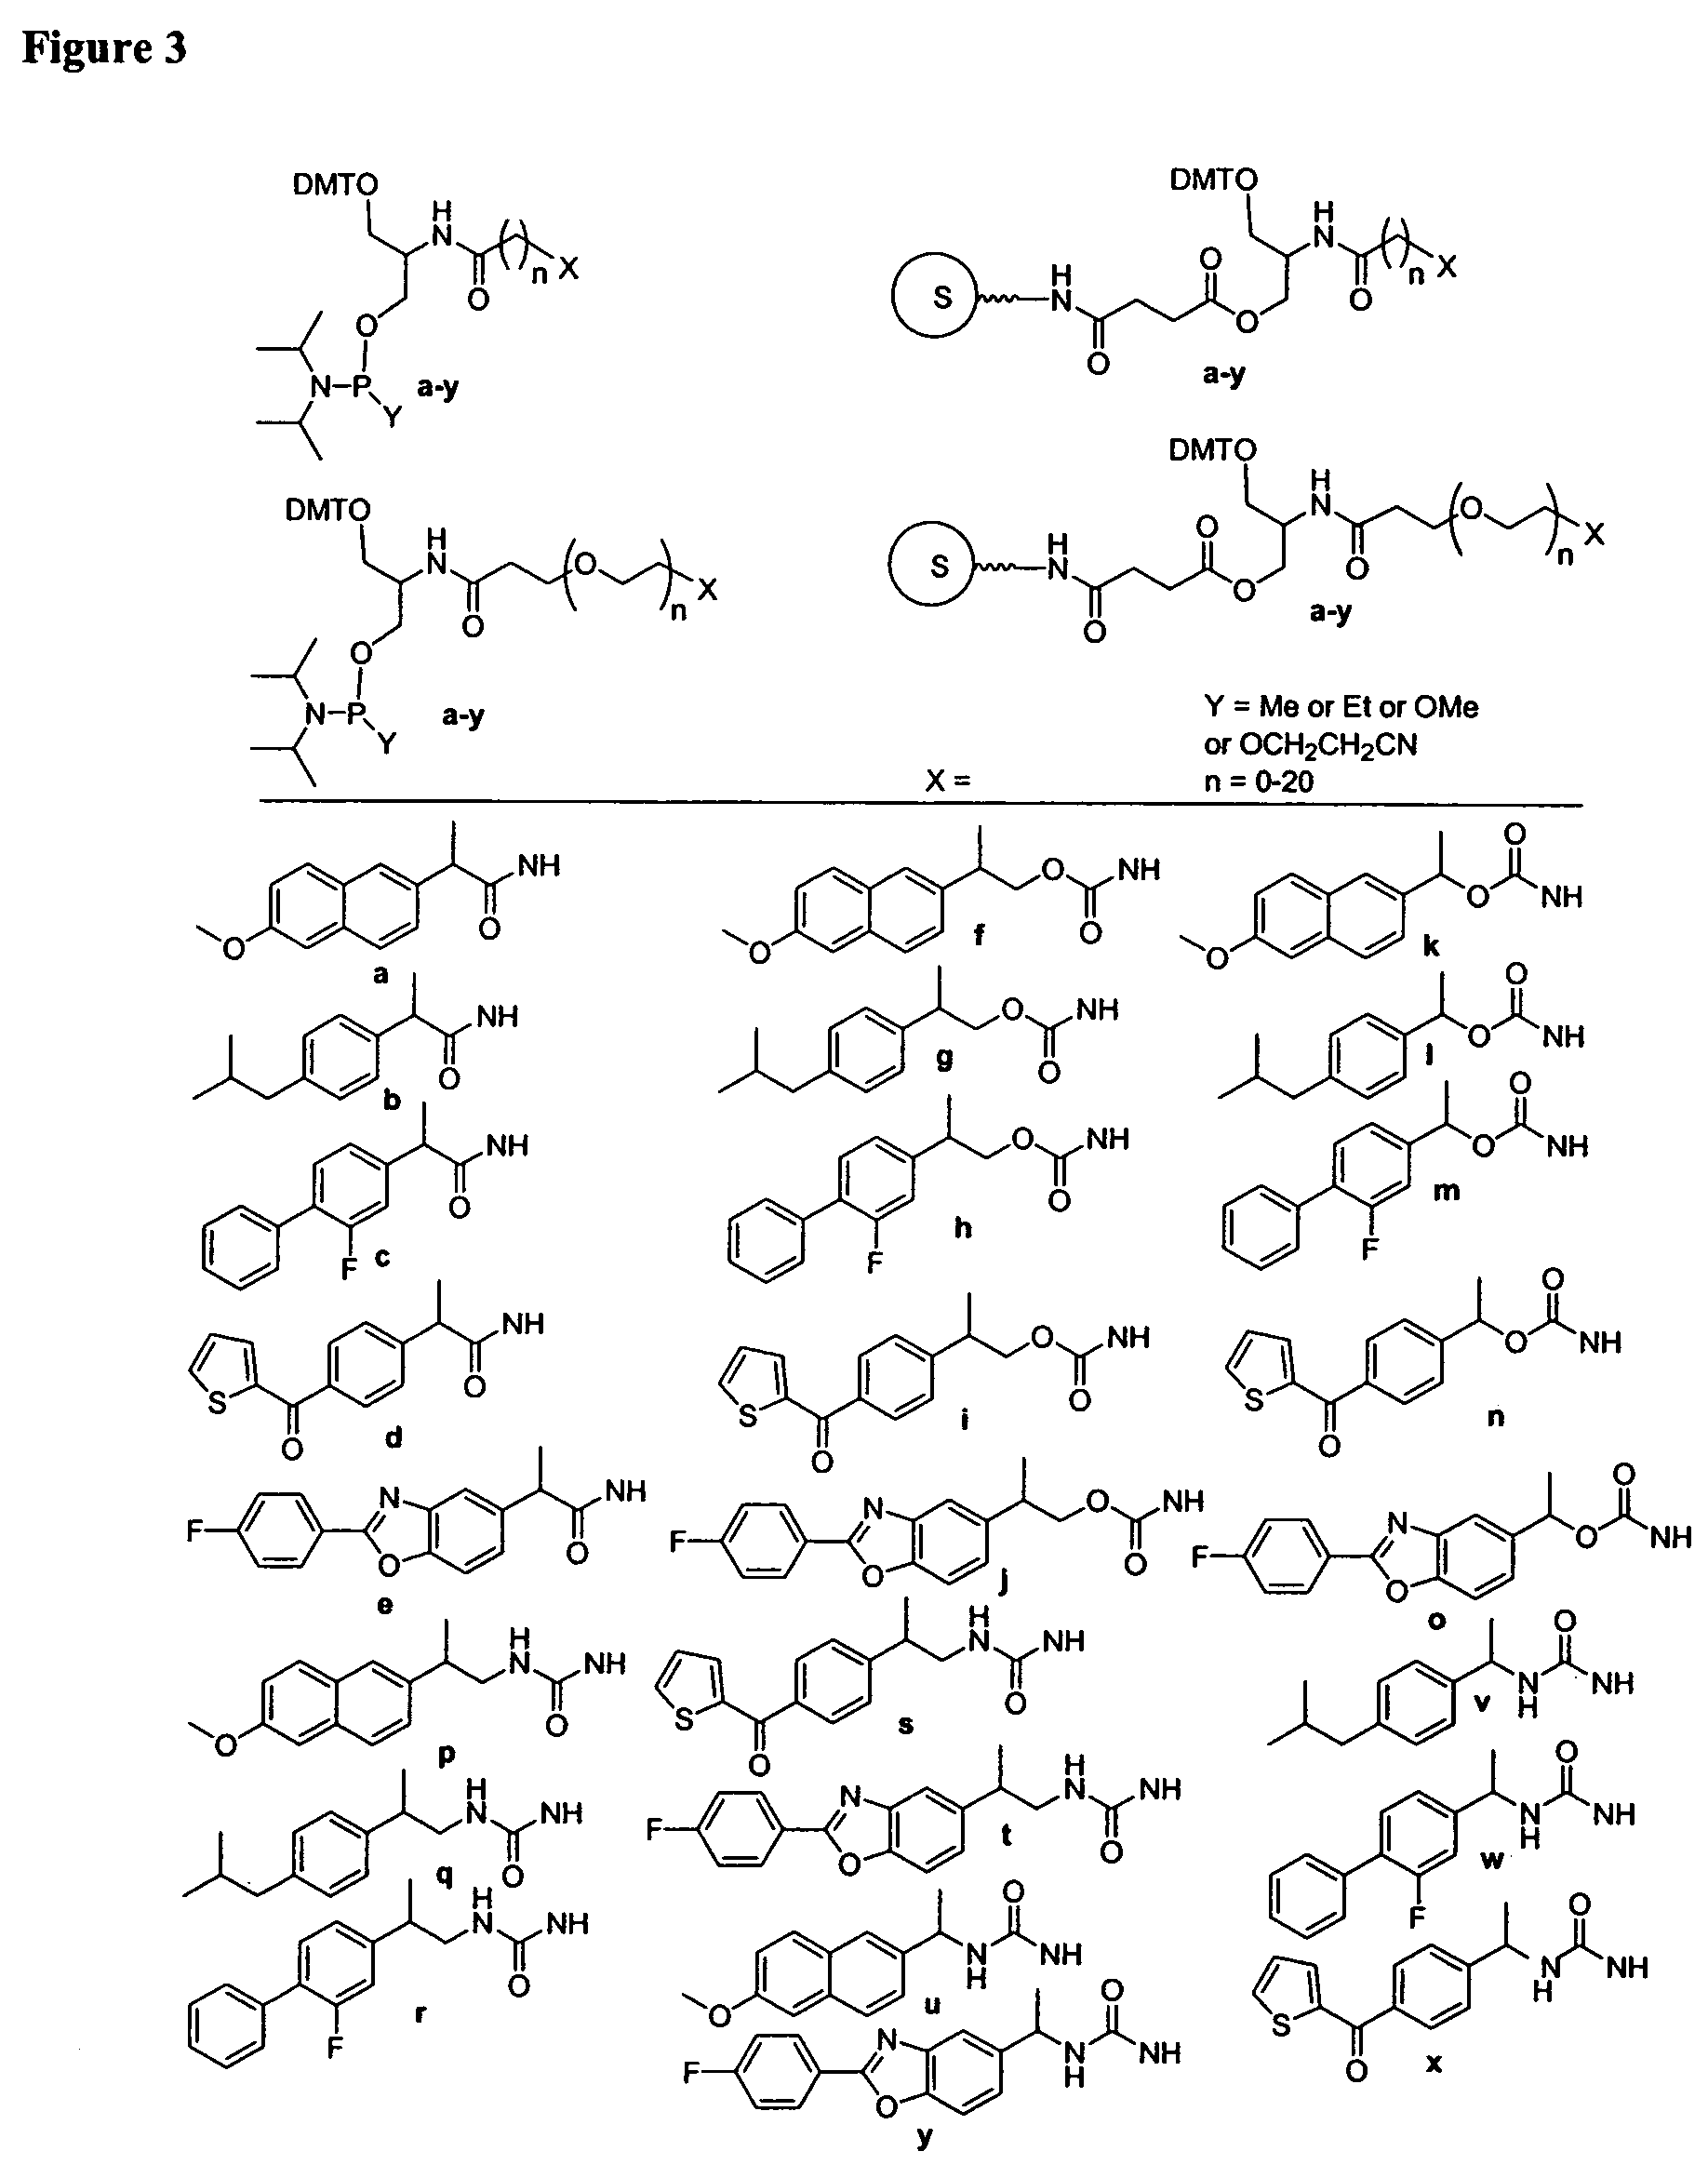 Oligonucleotides comprising a non-phosphate backbone linkage